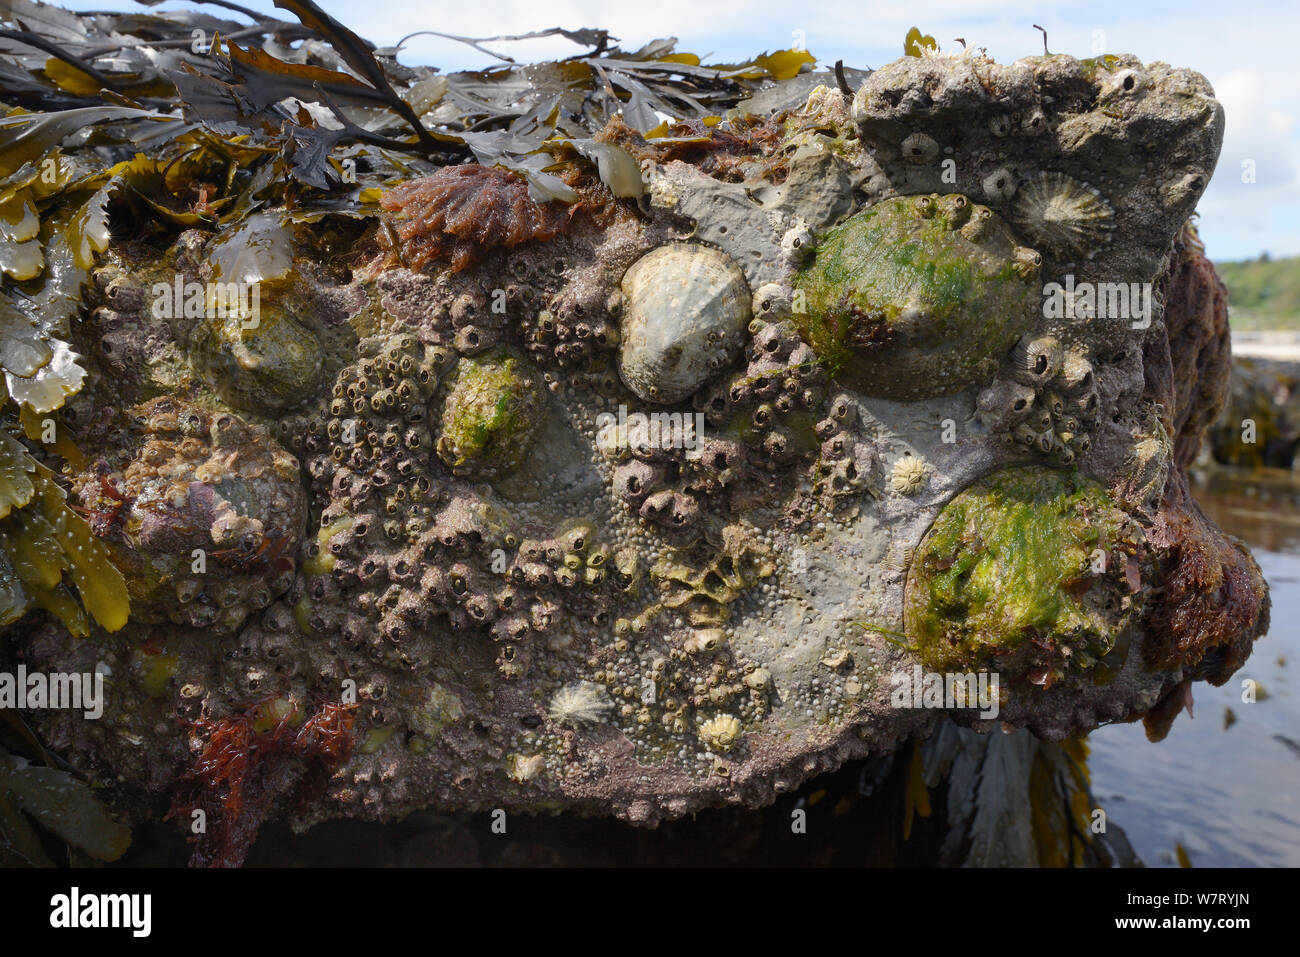 Gemeinsame Kletten (Patella Vulgata) und Acorn barnacles (Balanus perforatus) auf Felsen bei Ebbe freigelegt, Lyme Regis, Dorset, UK, April. Stockfoto